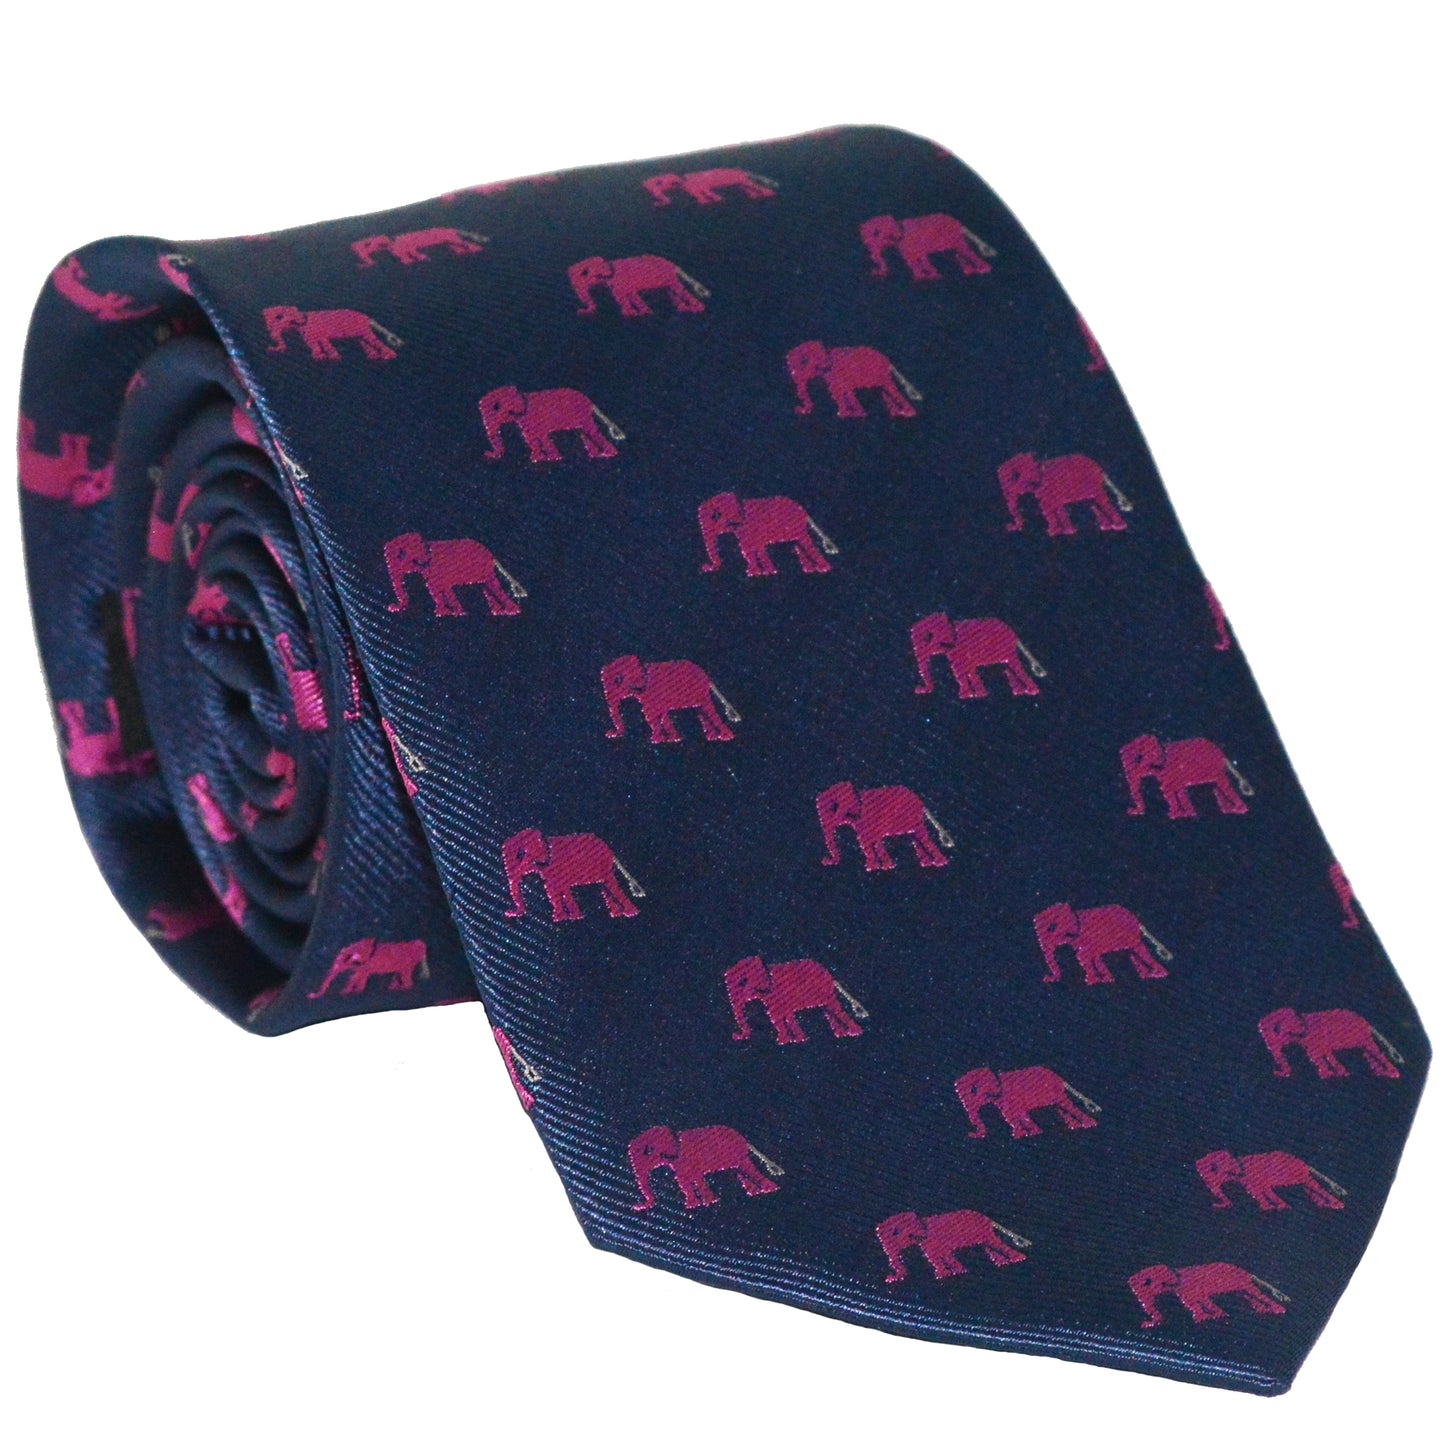 Elephant Necktie - Pink on Navy, Woven Silk - SummerTies